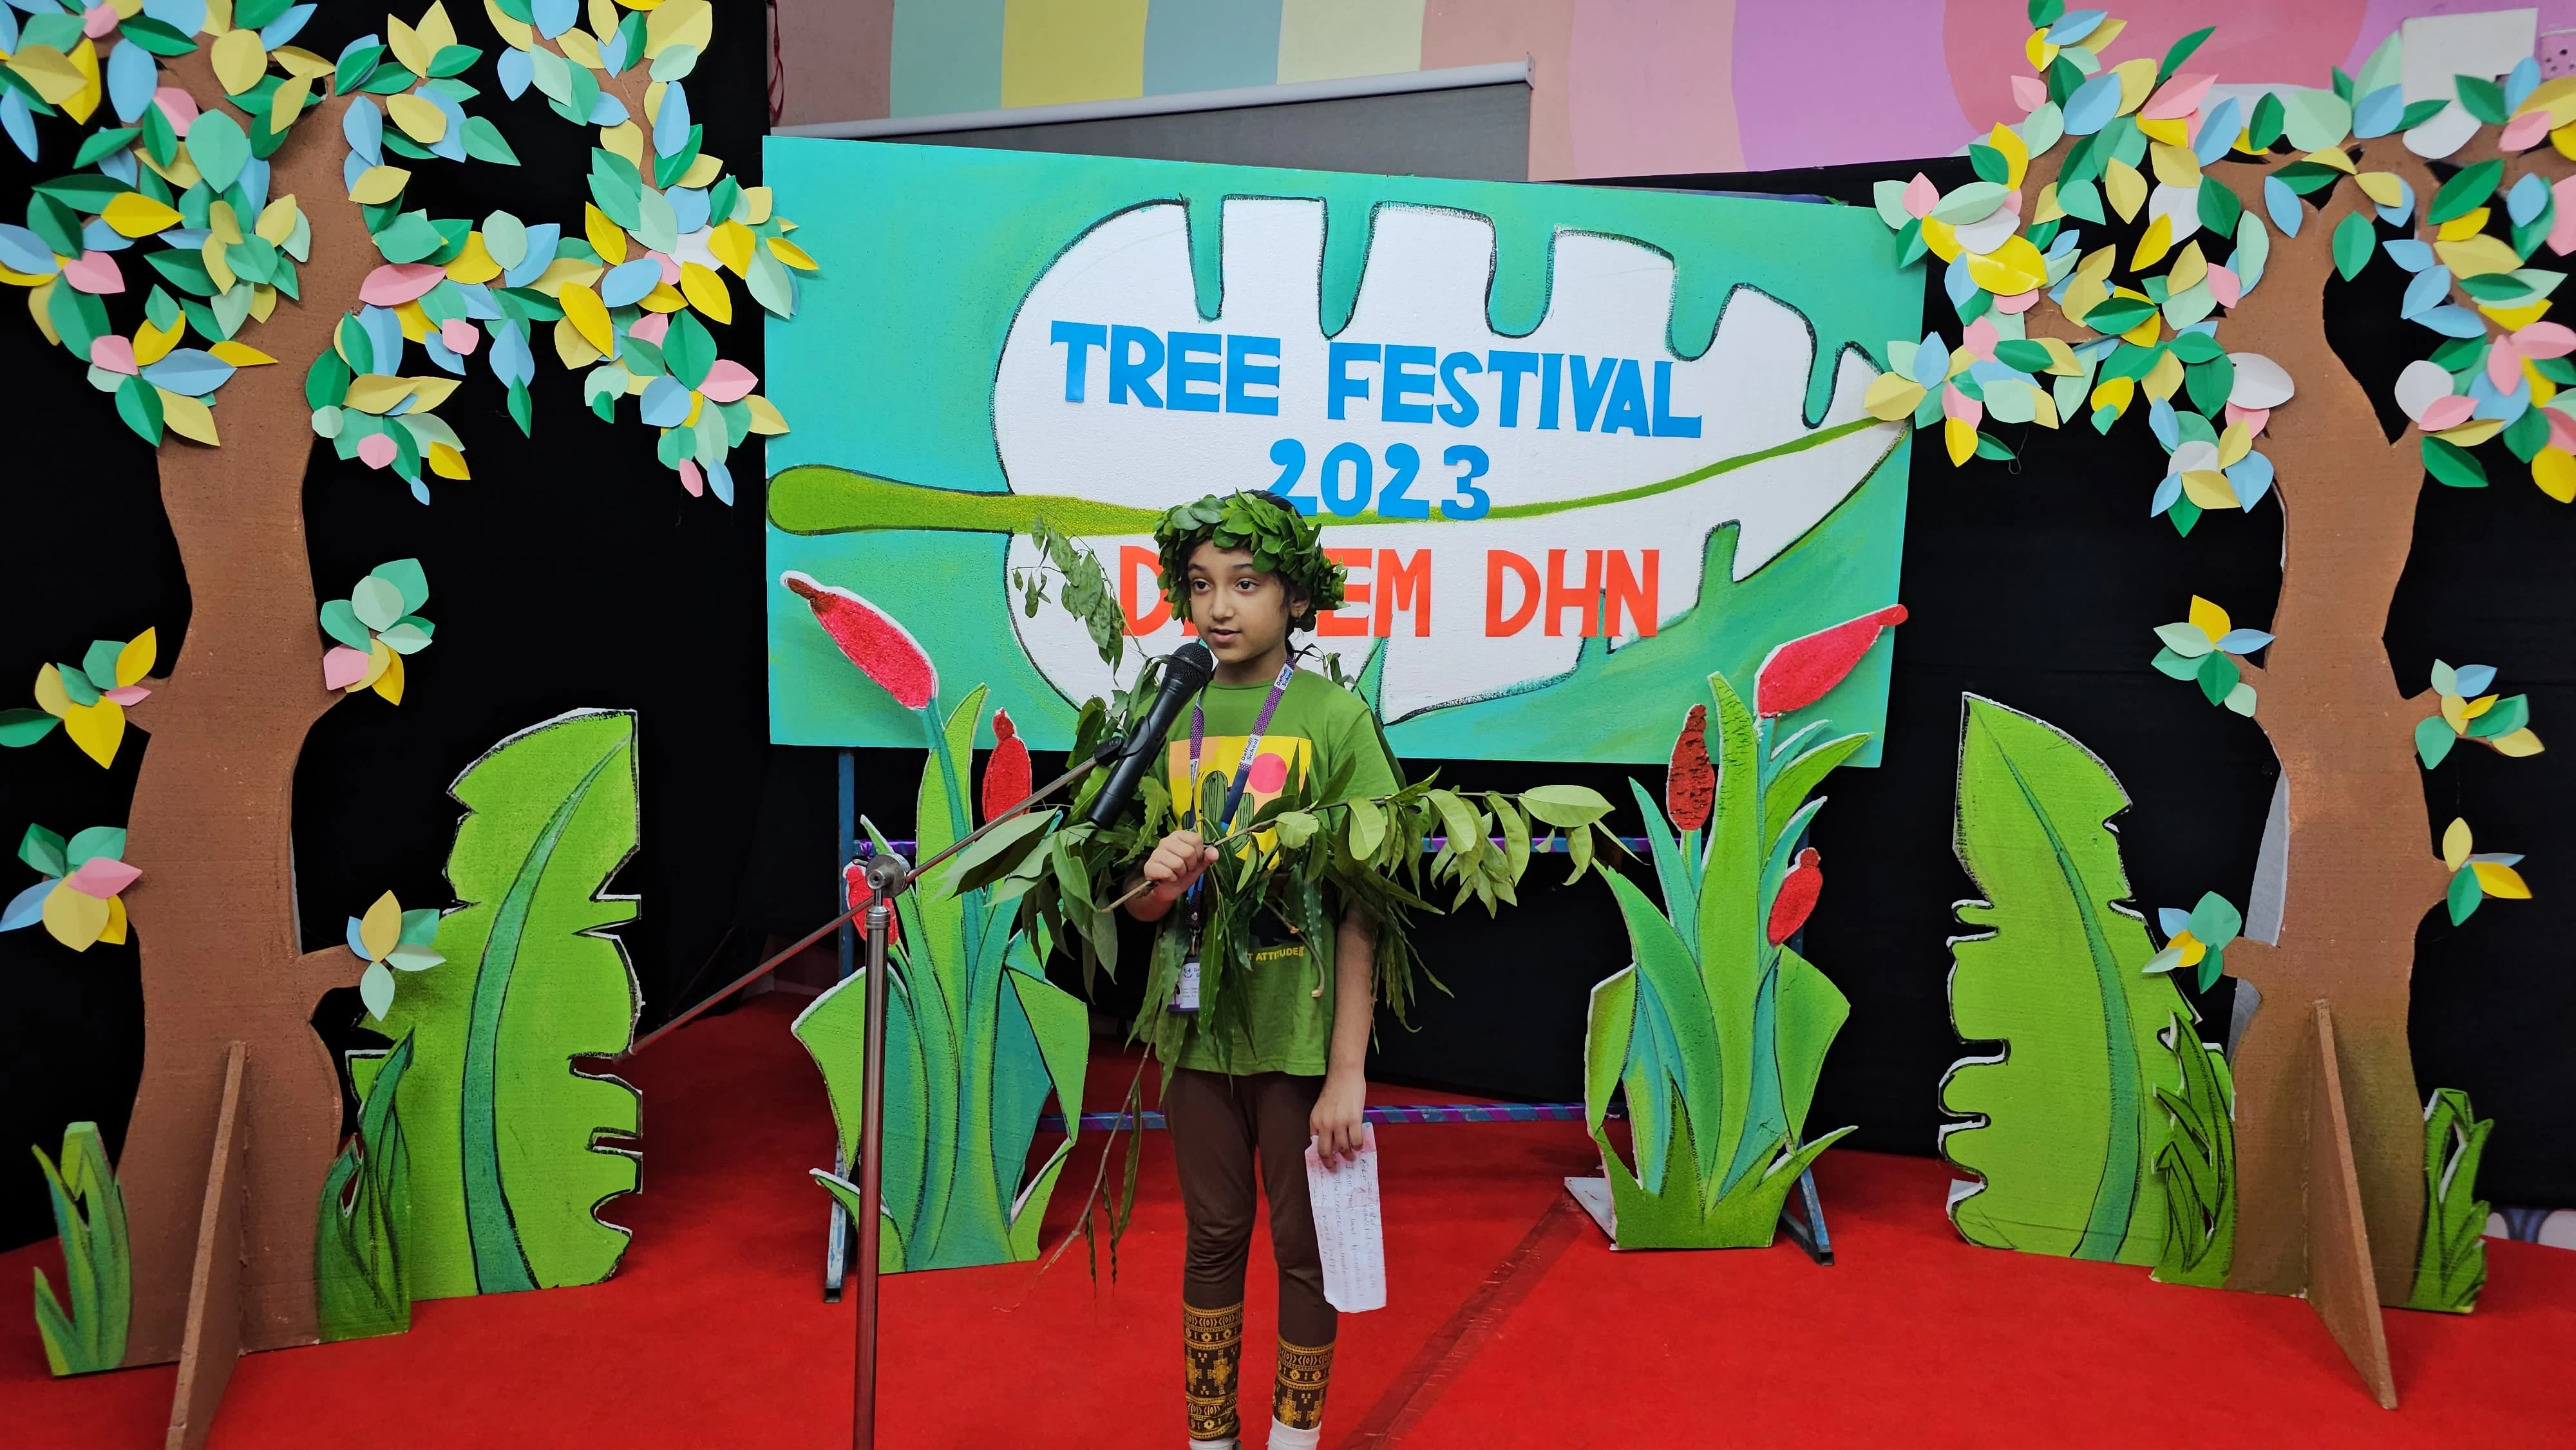 Tree Festival 2023